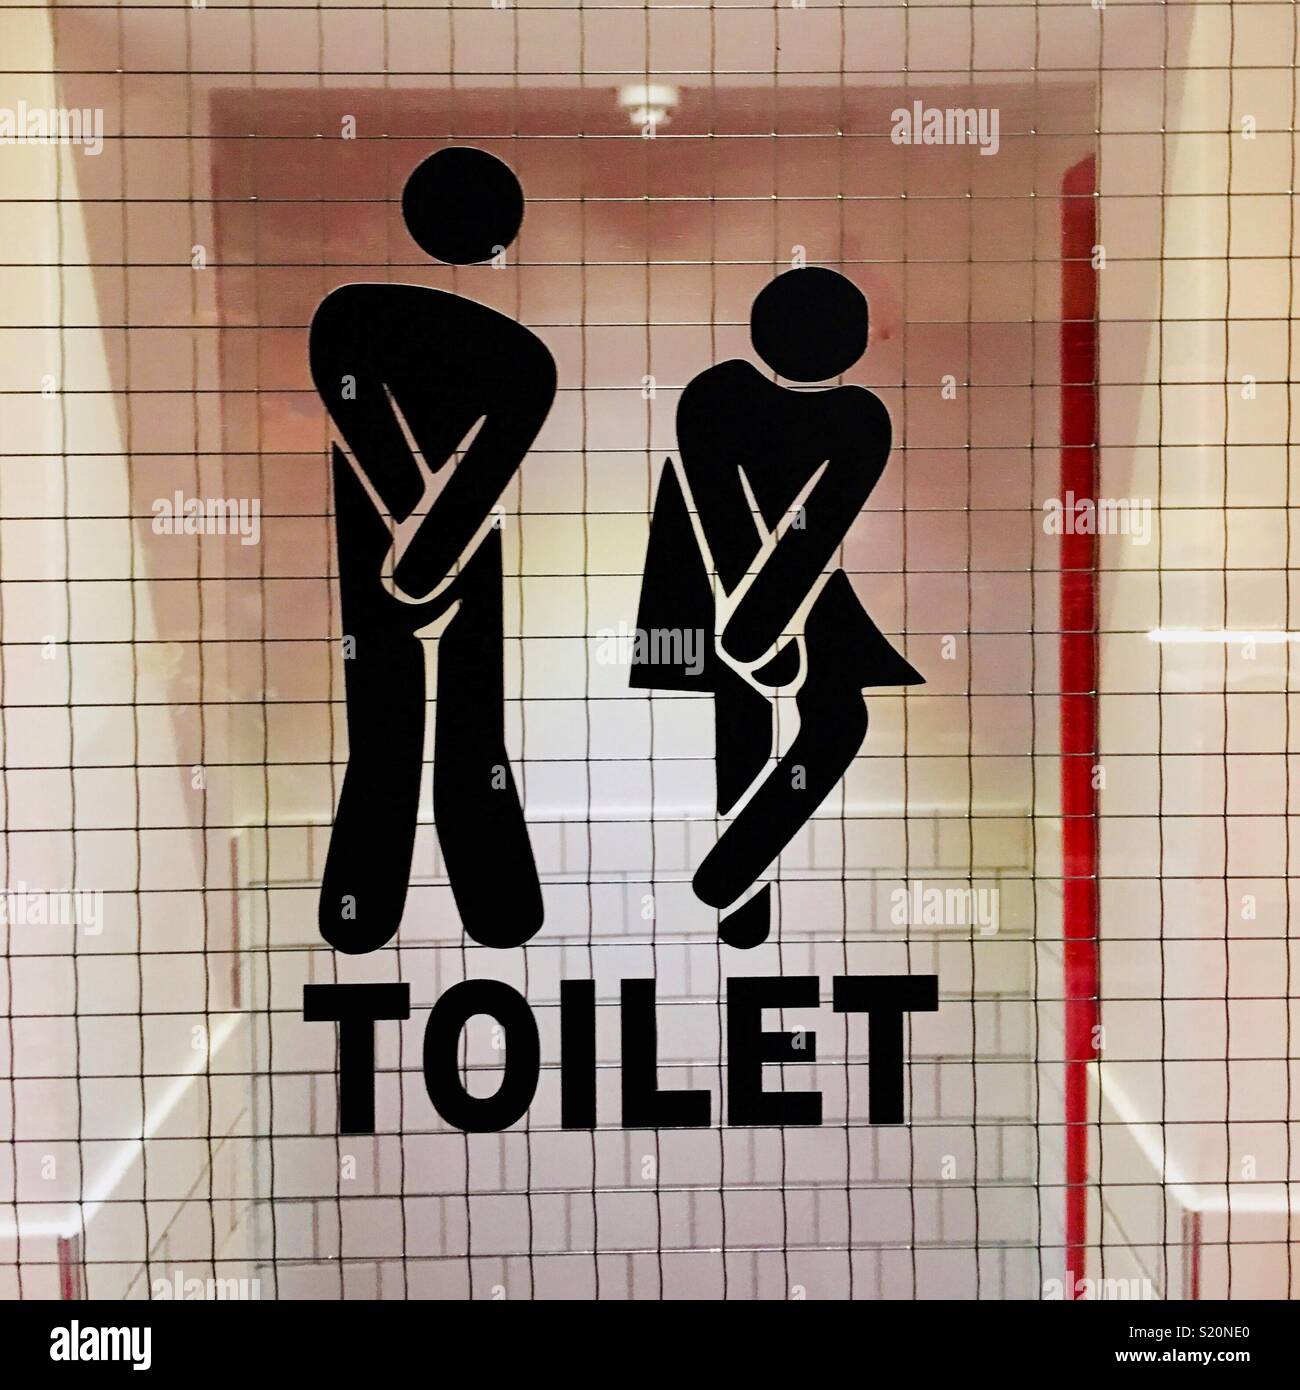 A funny bathroom toilet sign Stock Photo